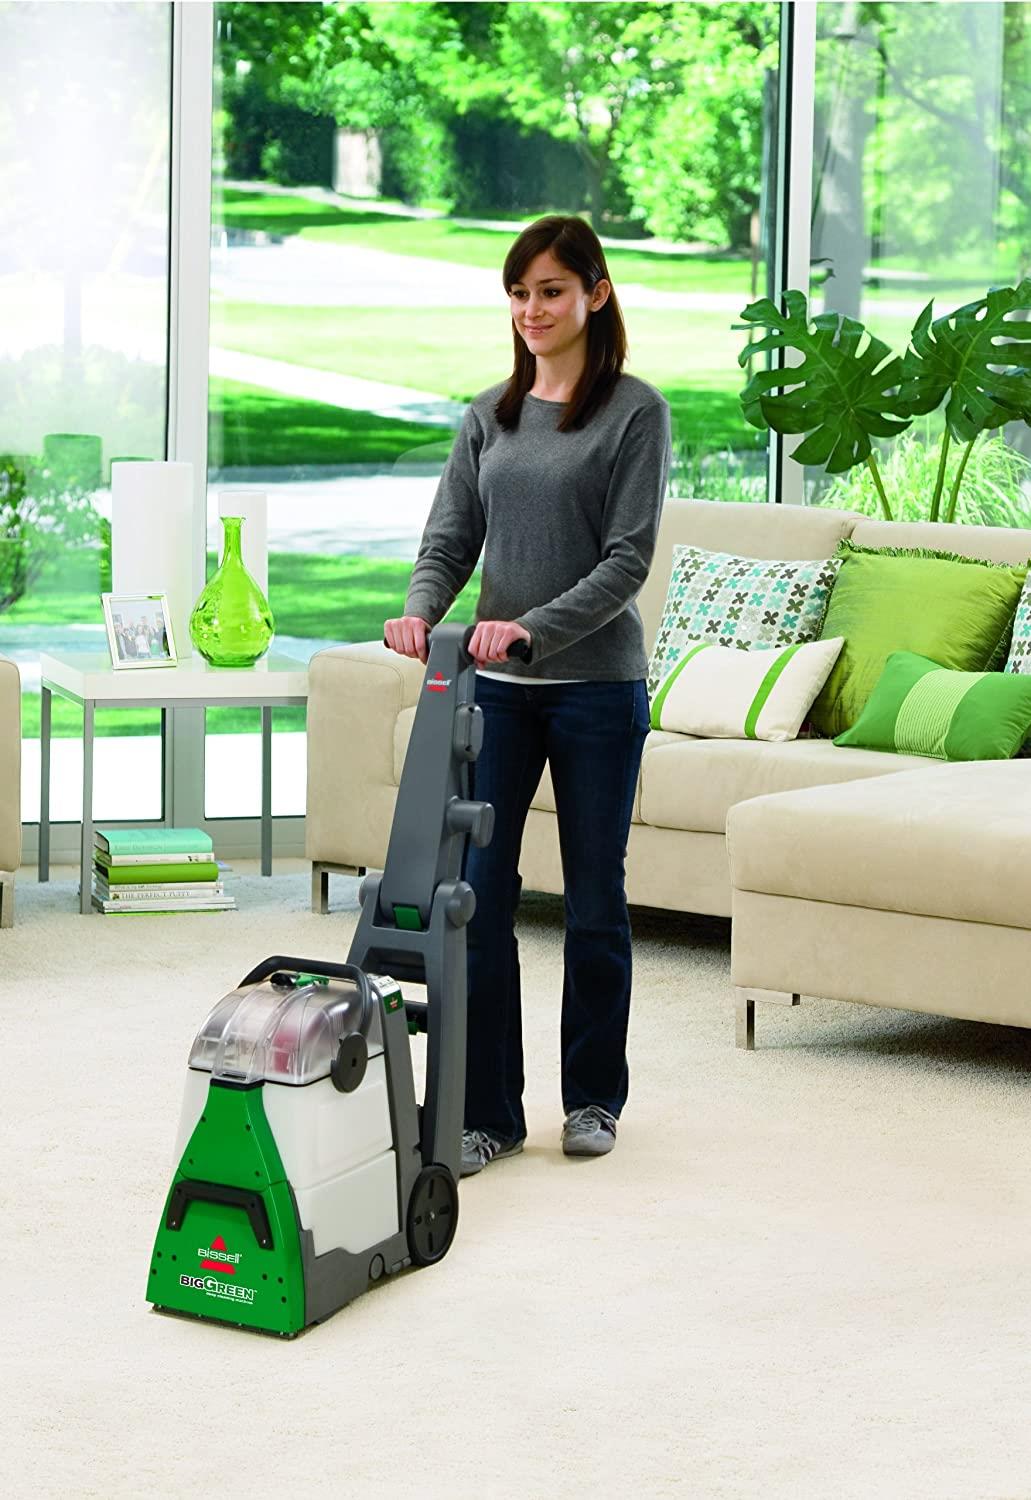 Bissell Big Green 48F3E Upright Carpet Cleaner